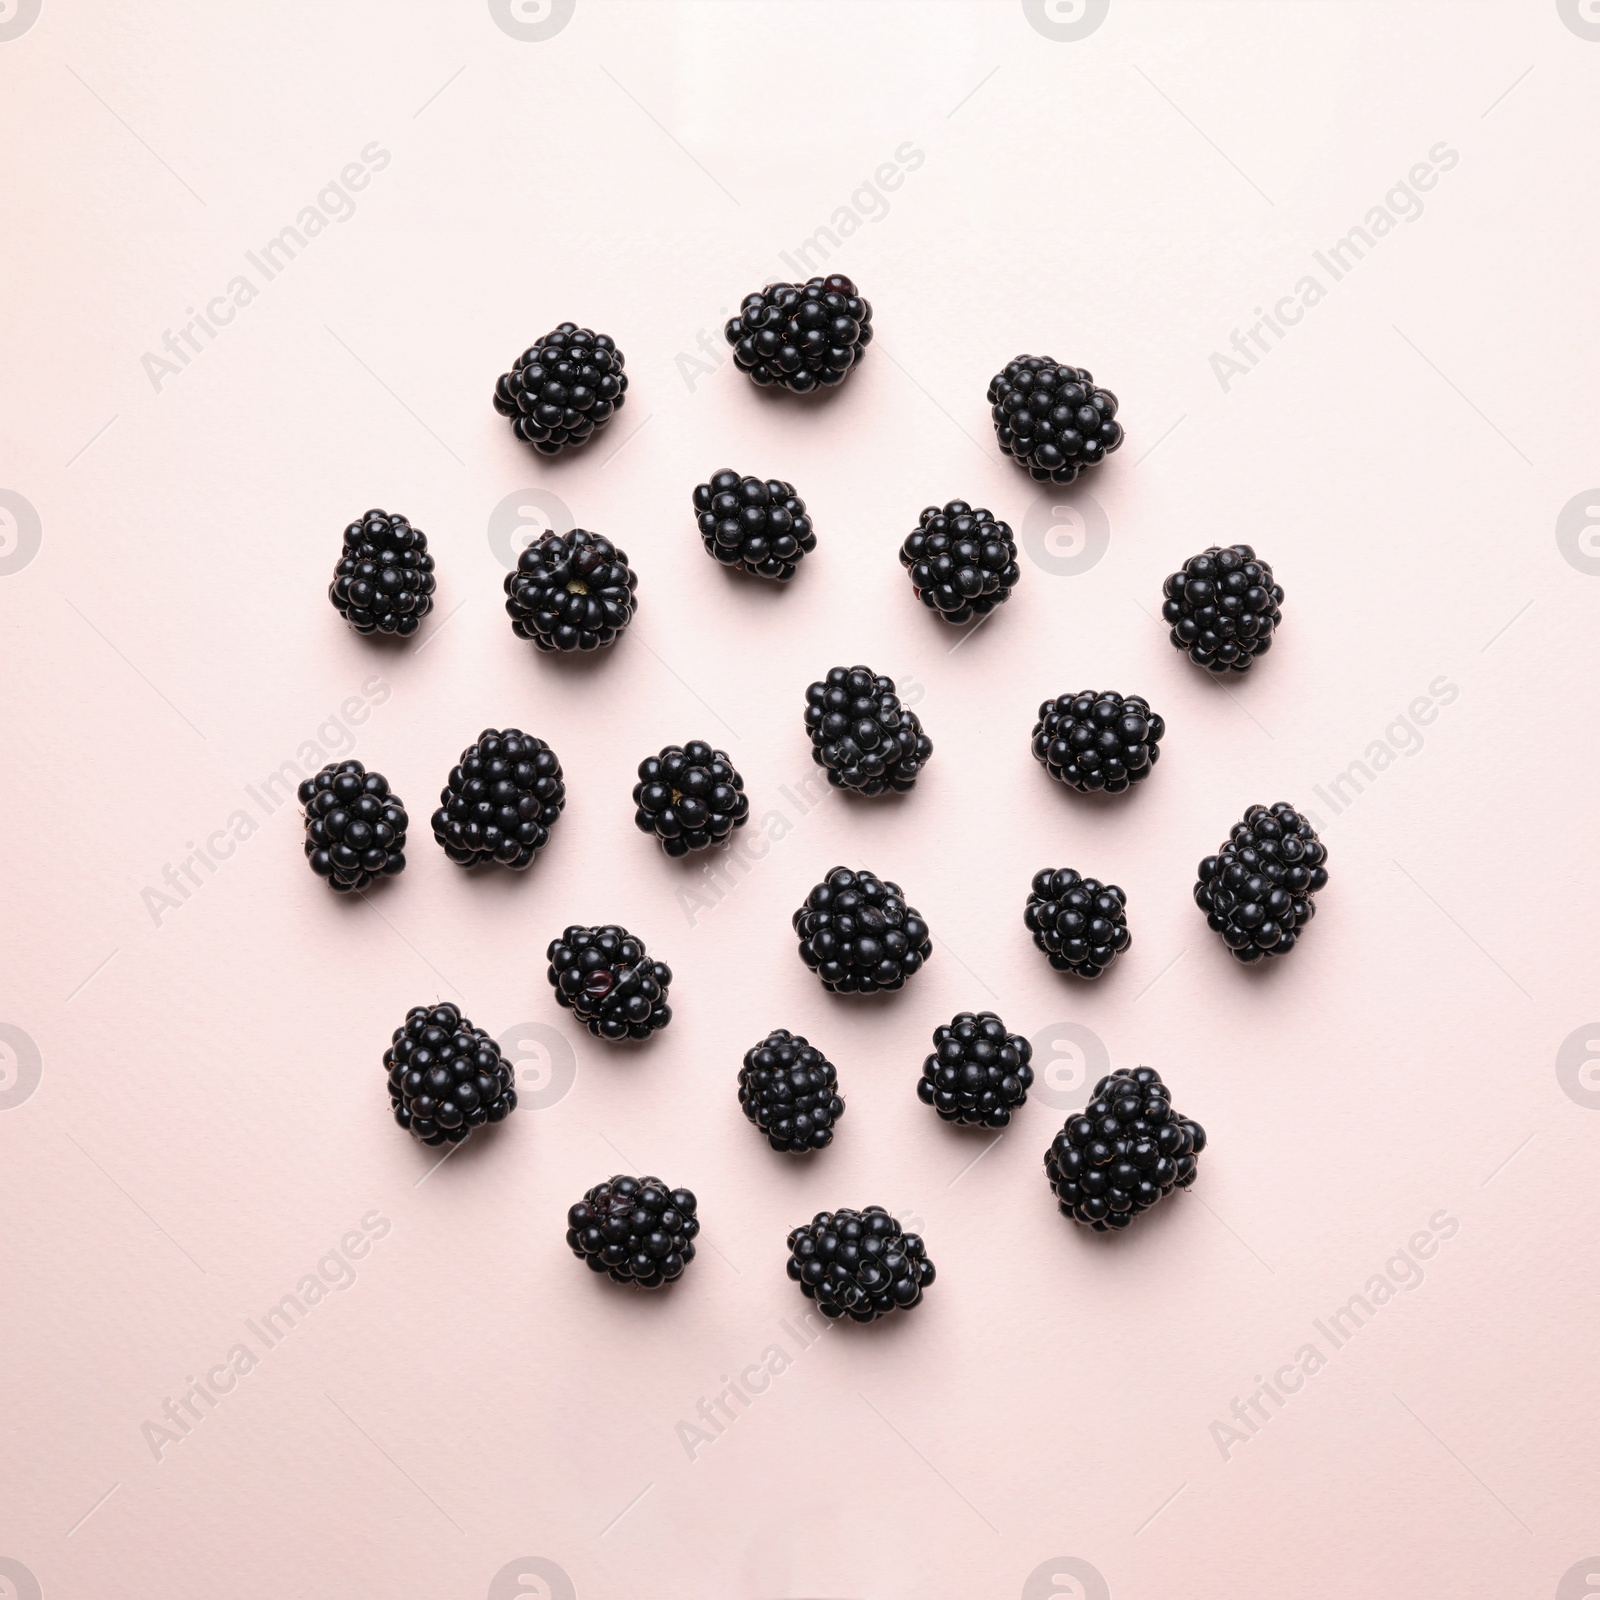 Photo of Tasty ripe blackberries on light background, flat lay